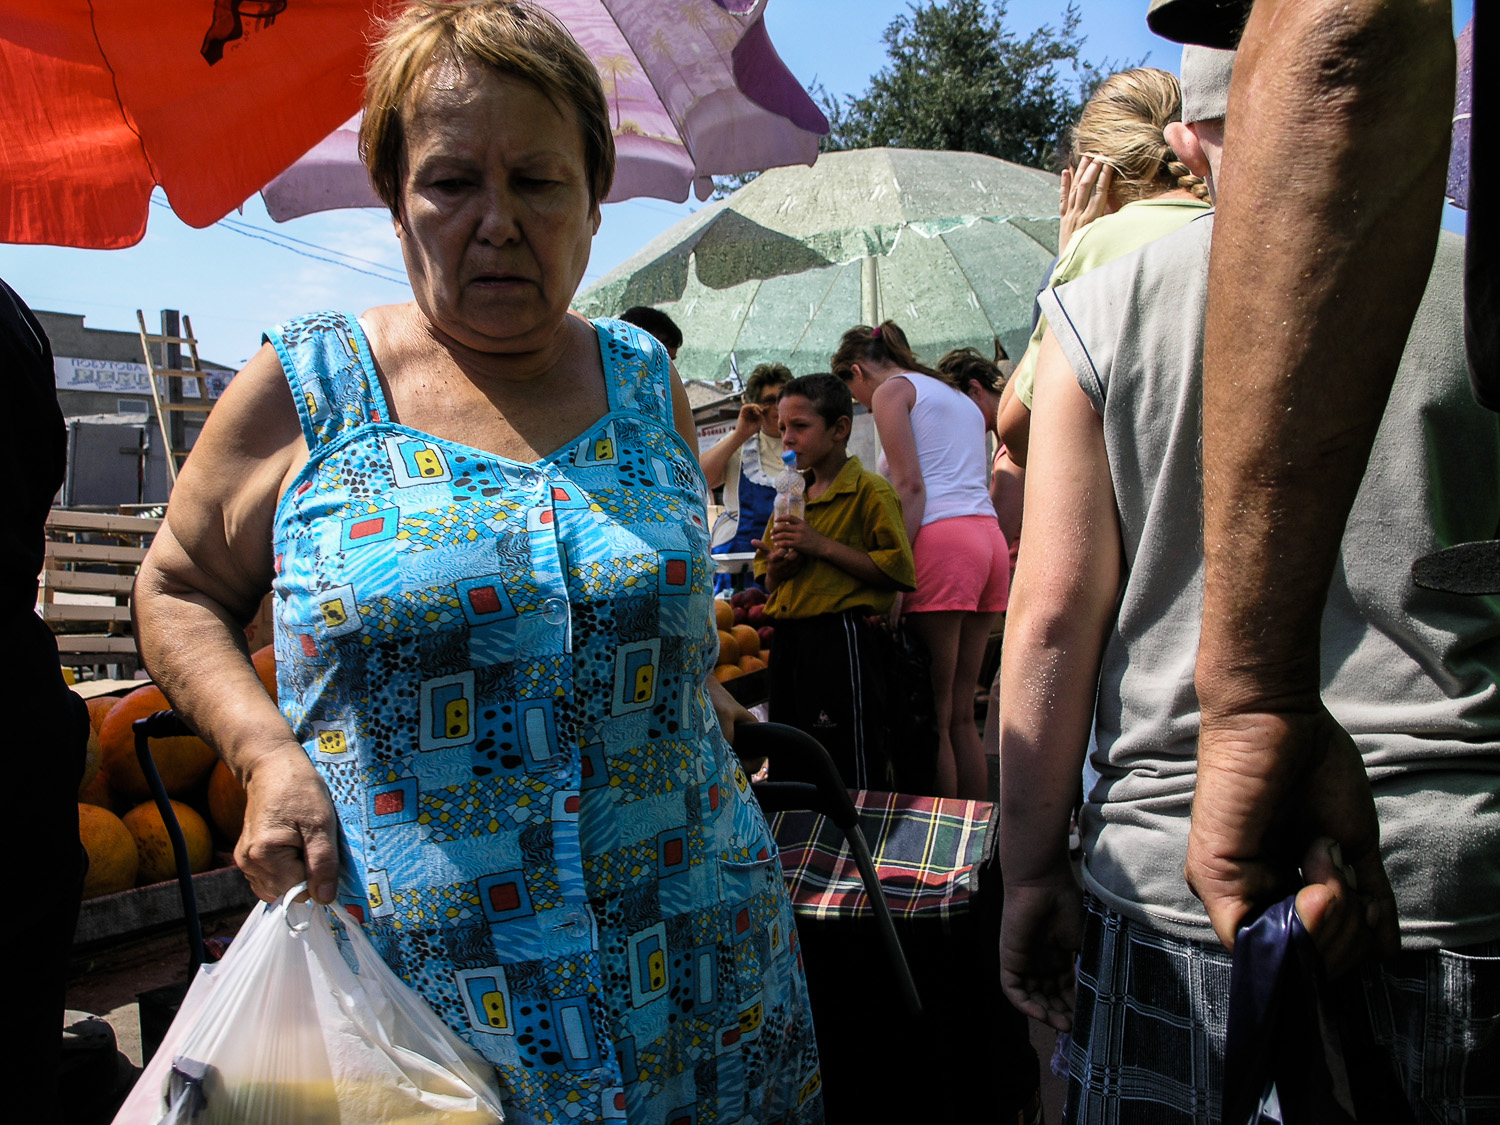  In a market in Odessa. 